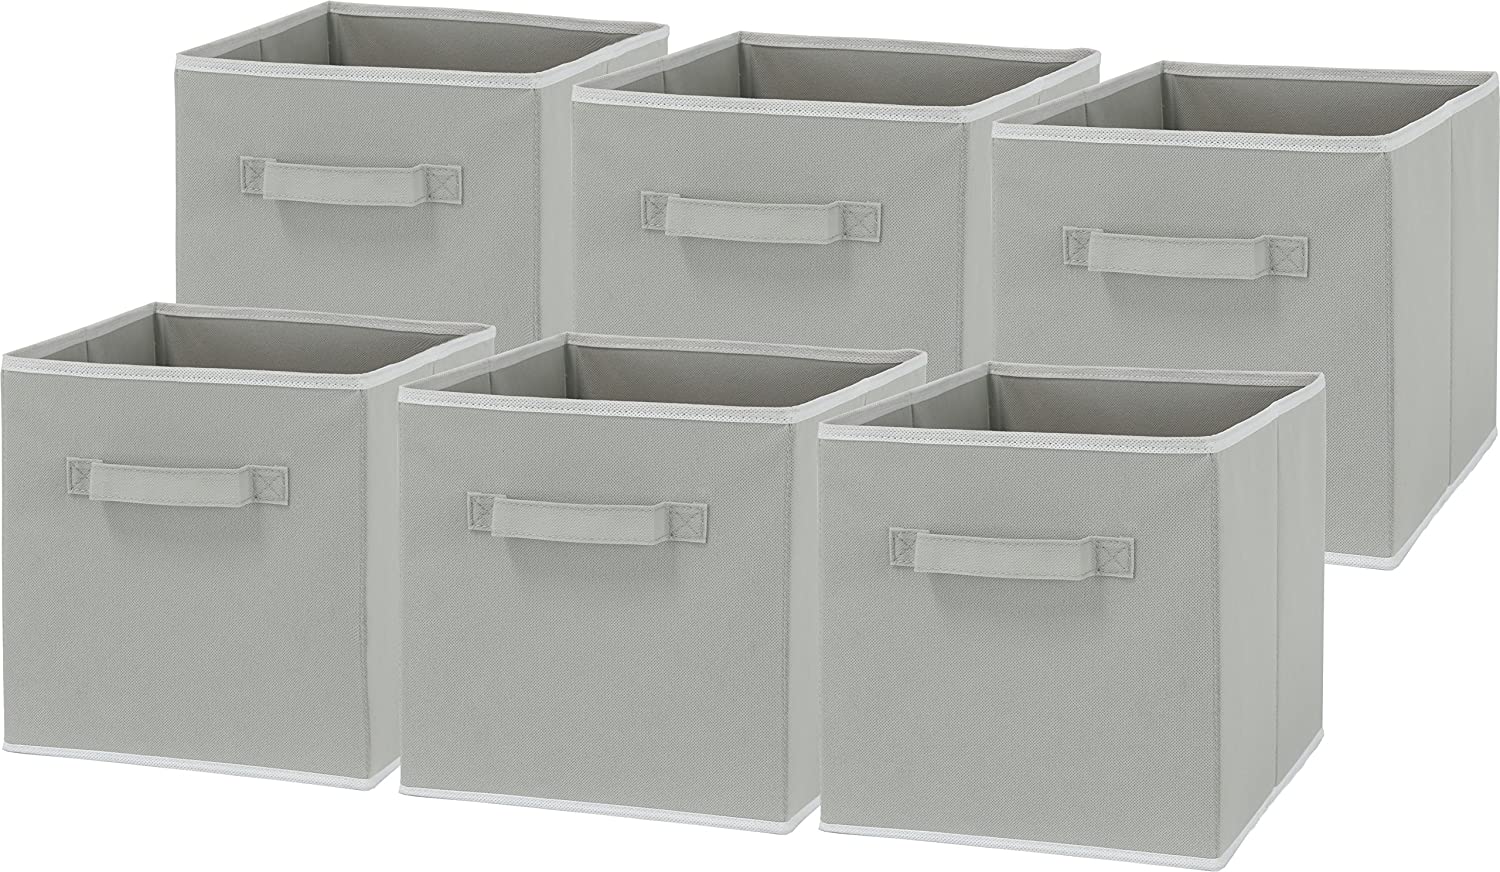 Simple Houseware Folding Cube Organization Storage Bin, 6-Piece